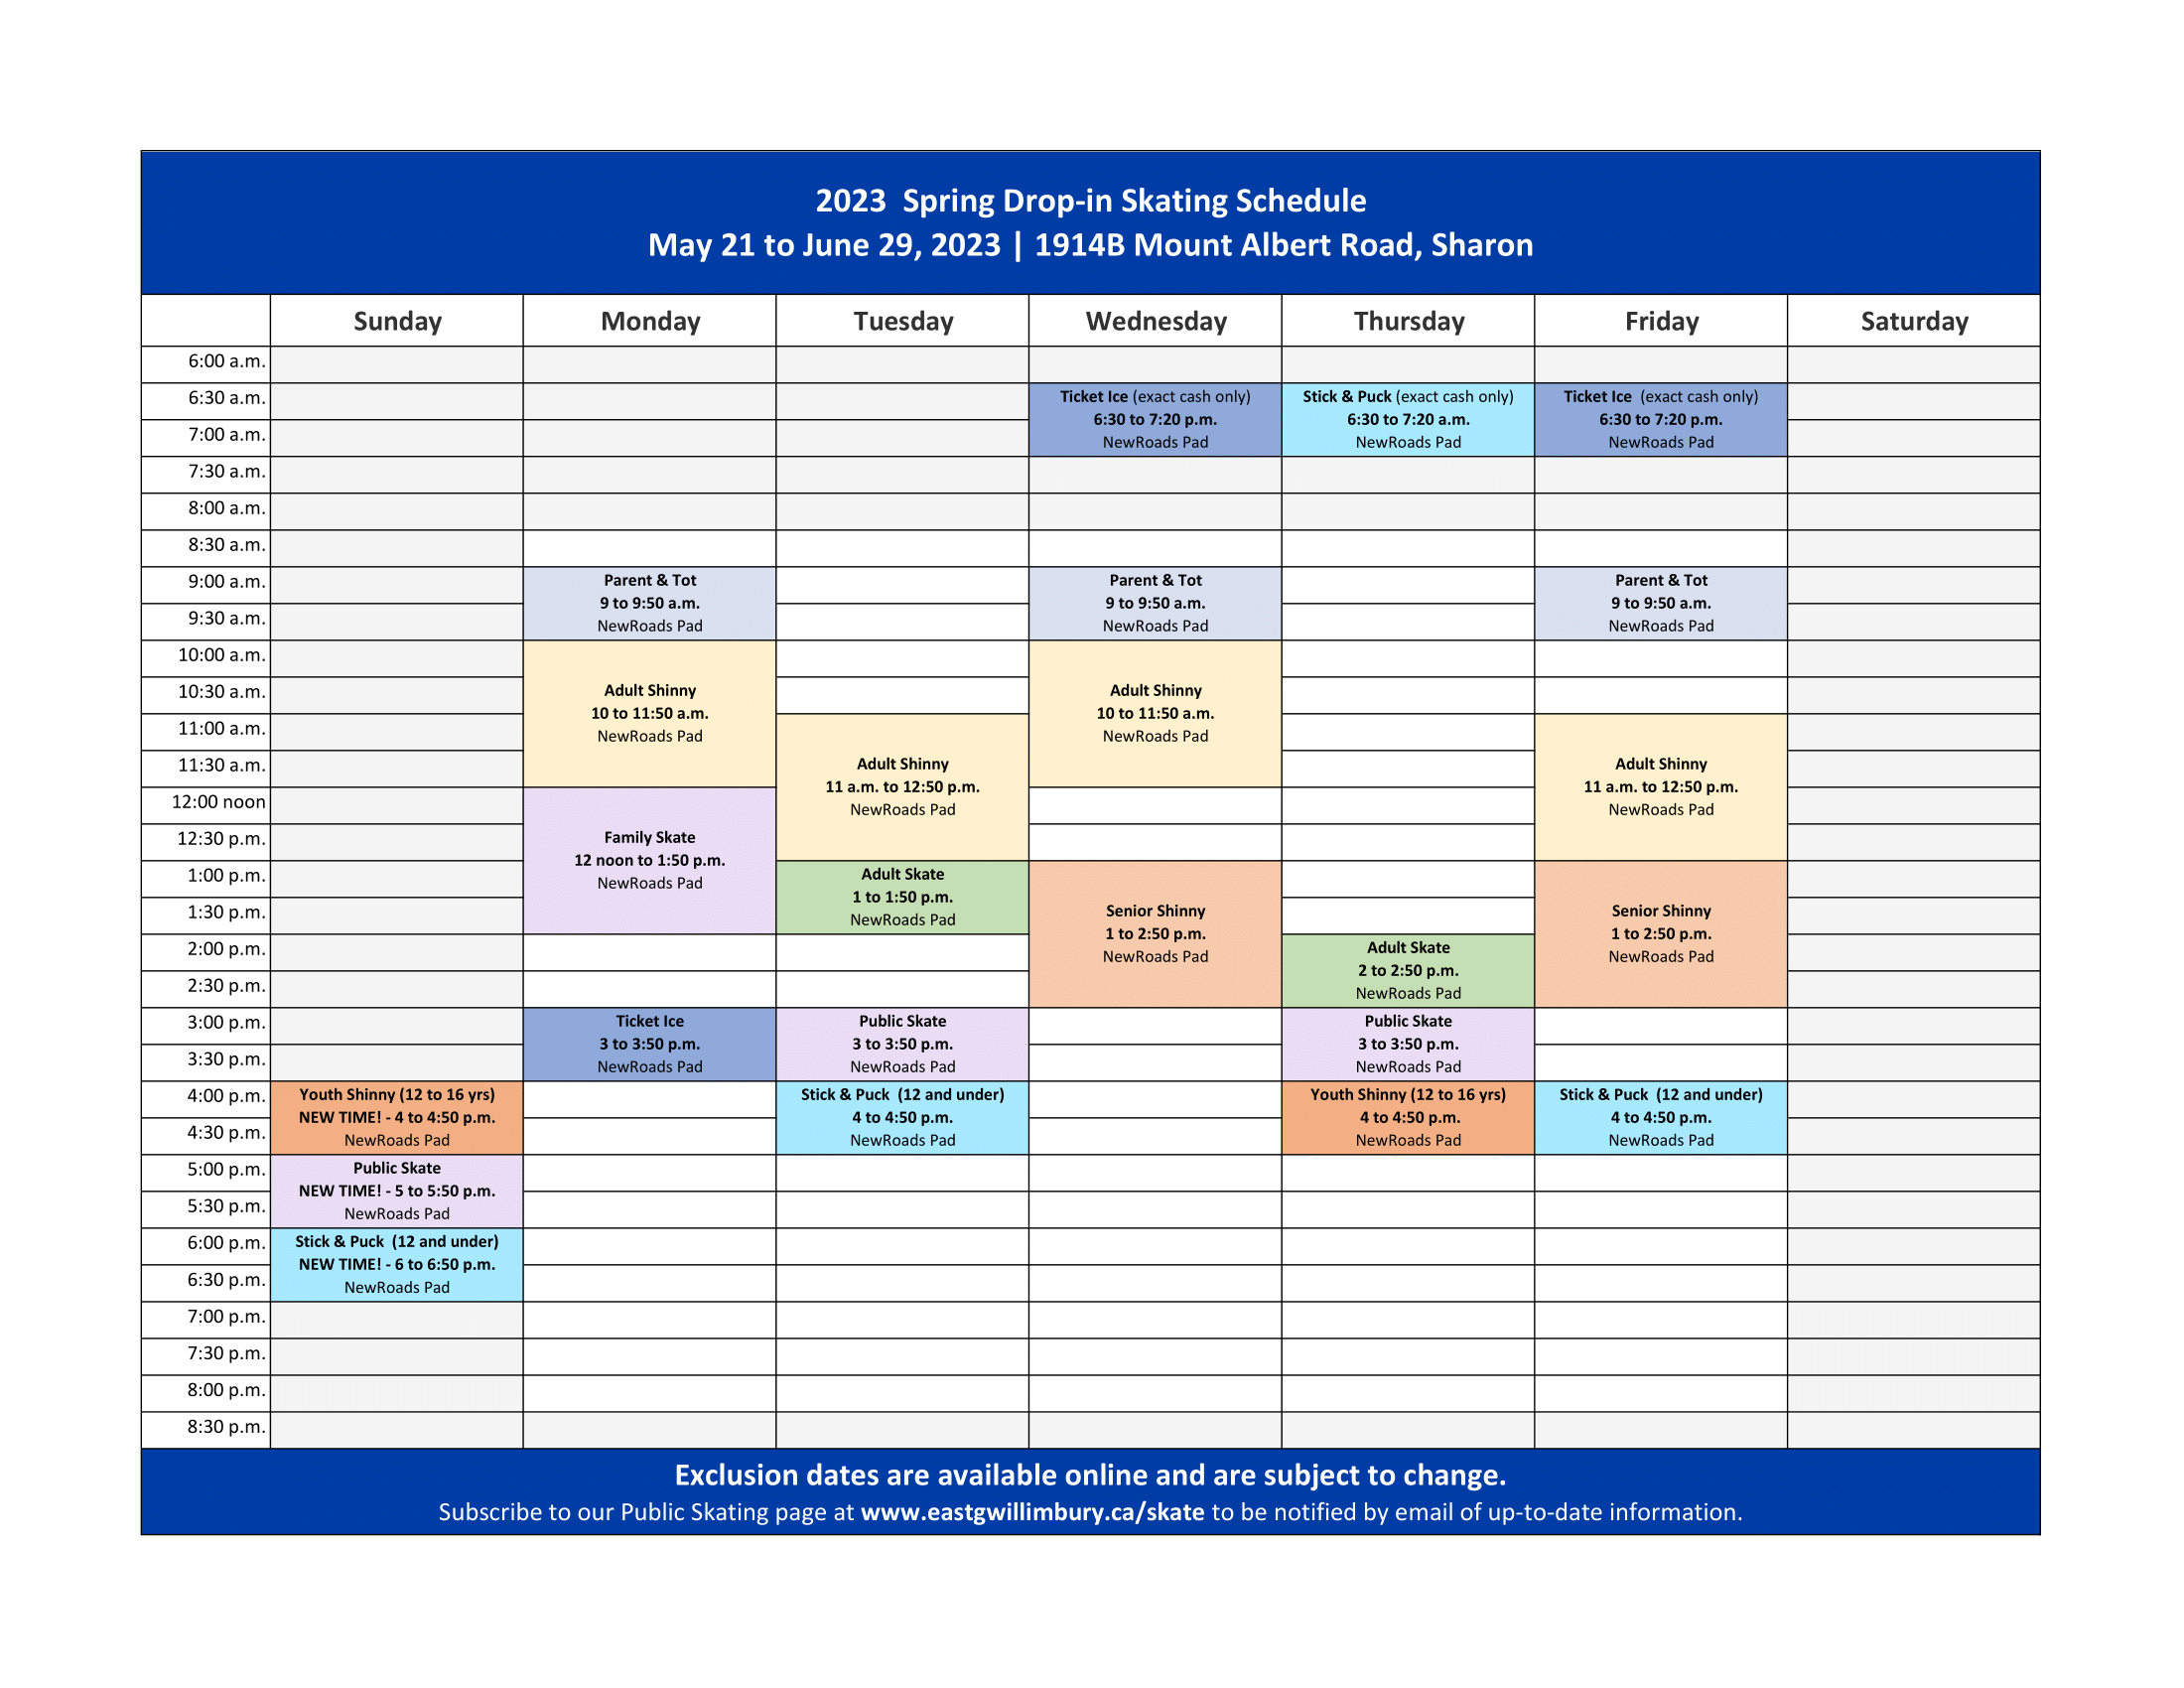 2023 Updated Spring Skating Schedule